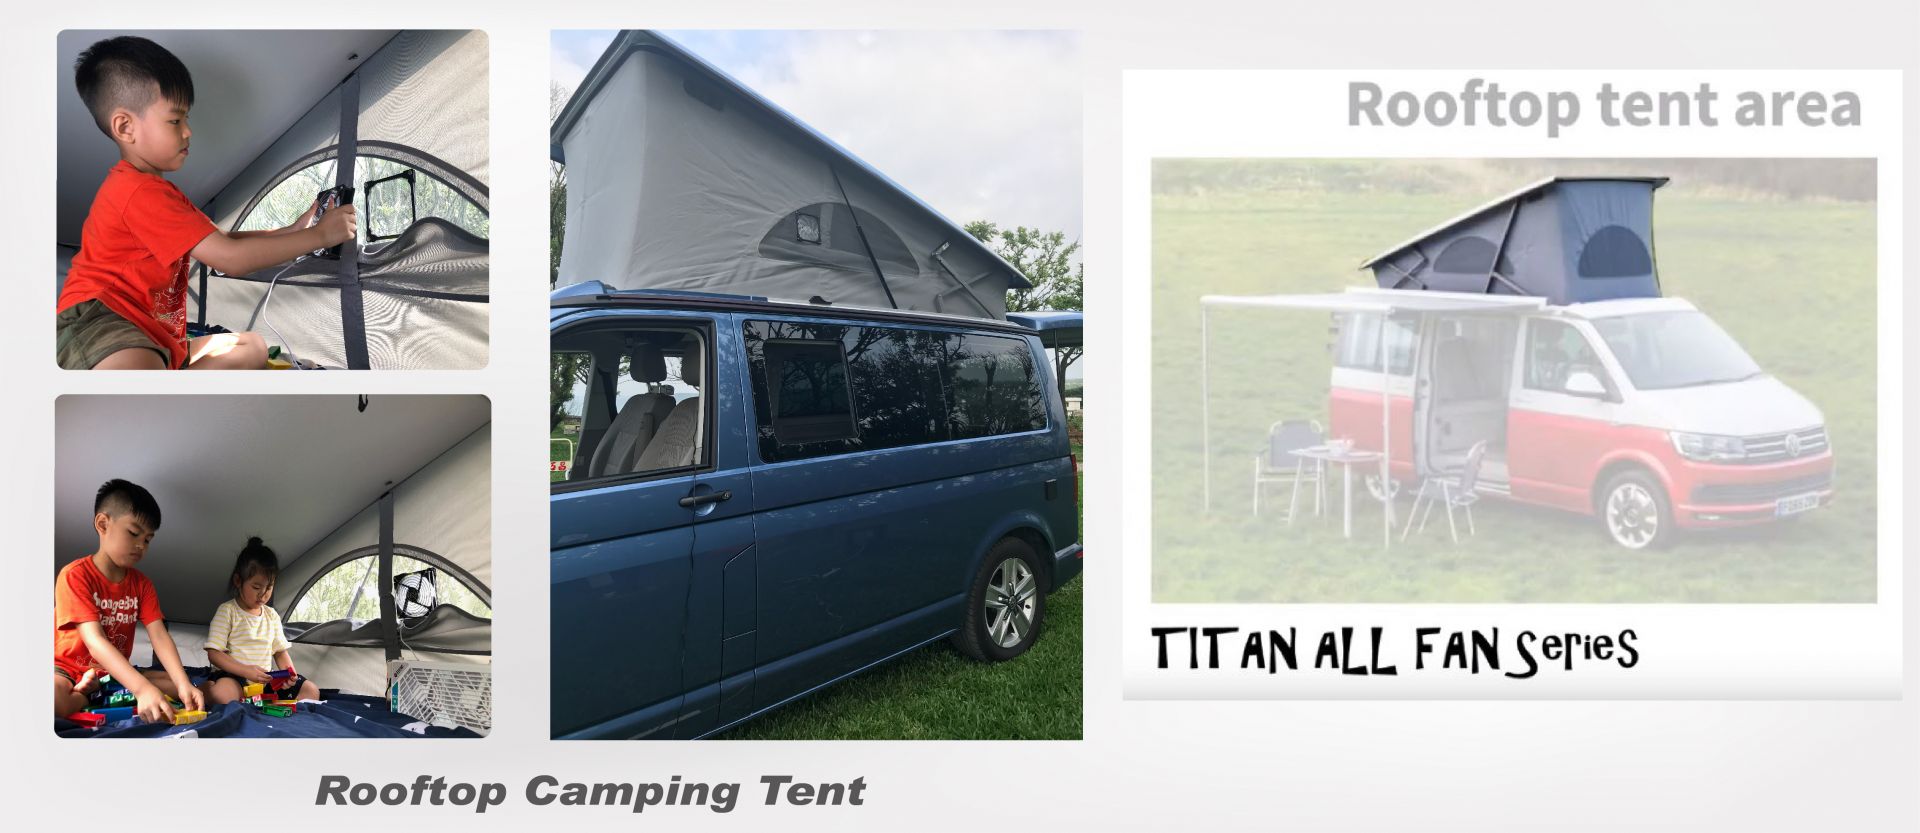 VW 캘리포니아의 옥상 텐트 환기